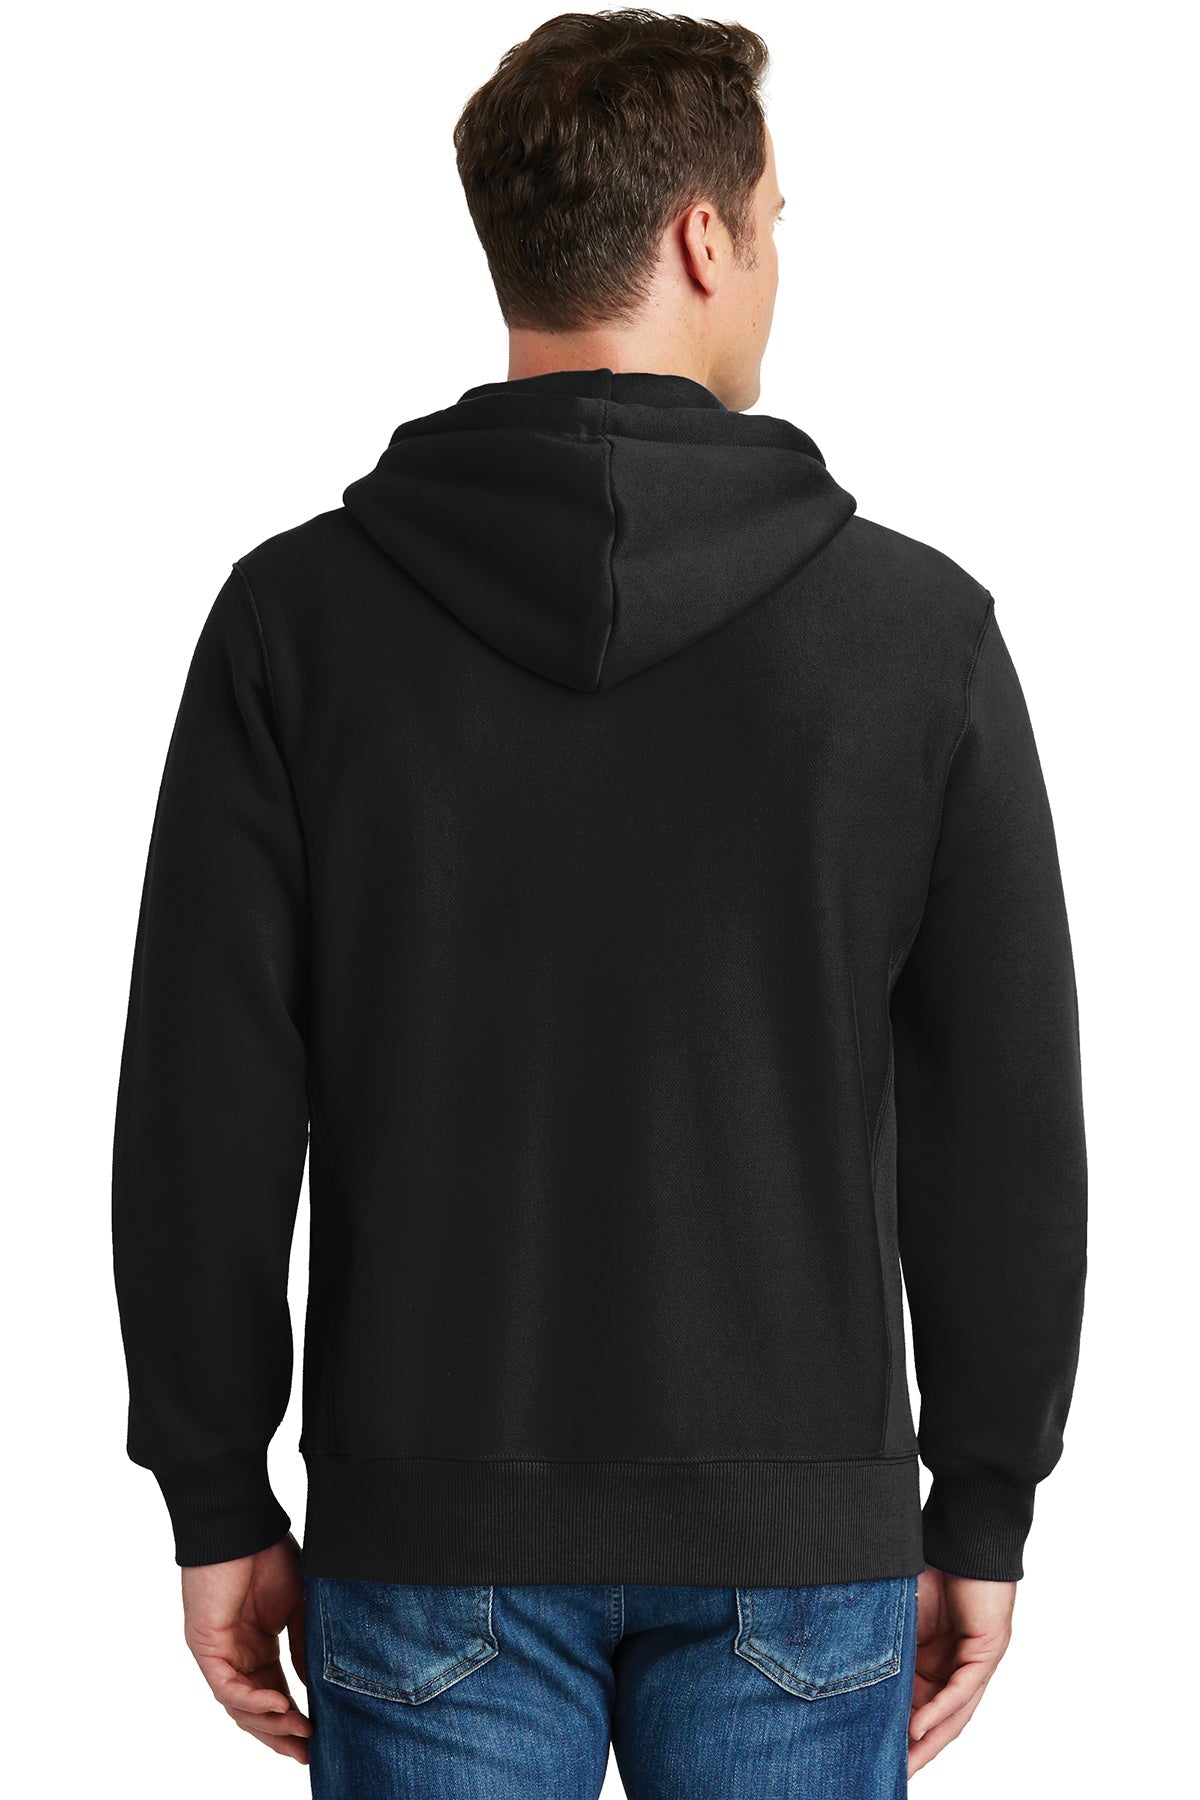 sport-tek_f282 _black_company_logo_sweatshirts